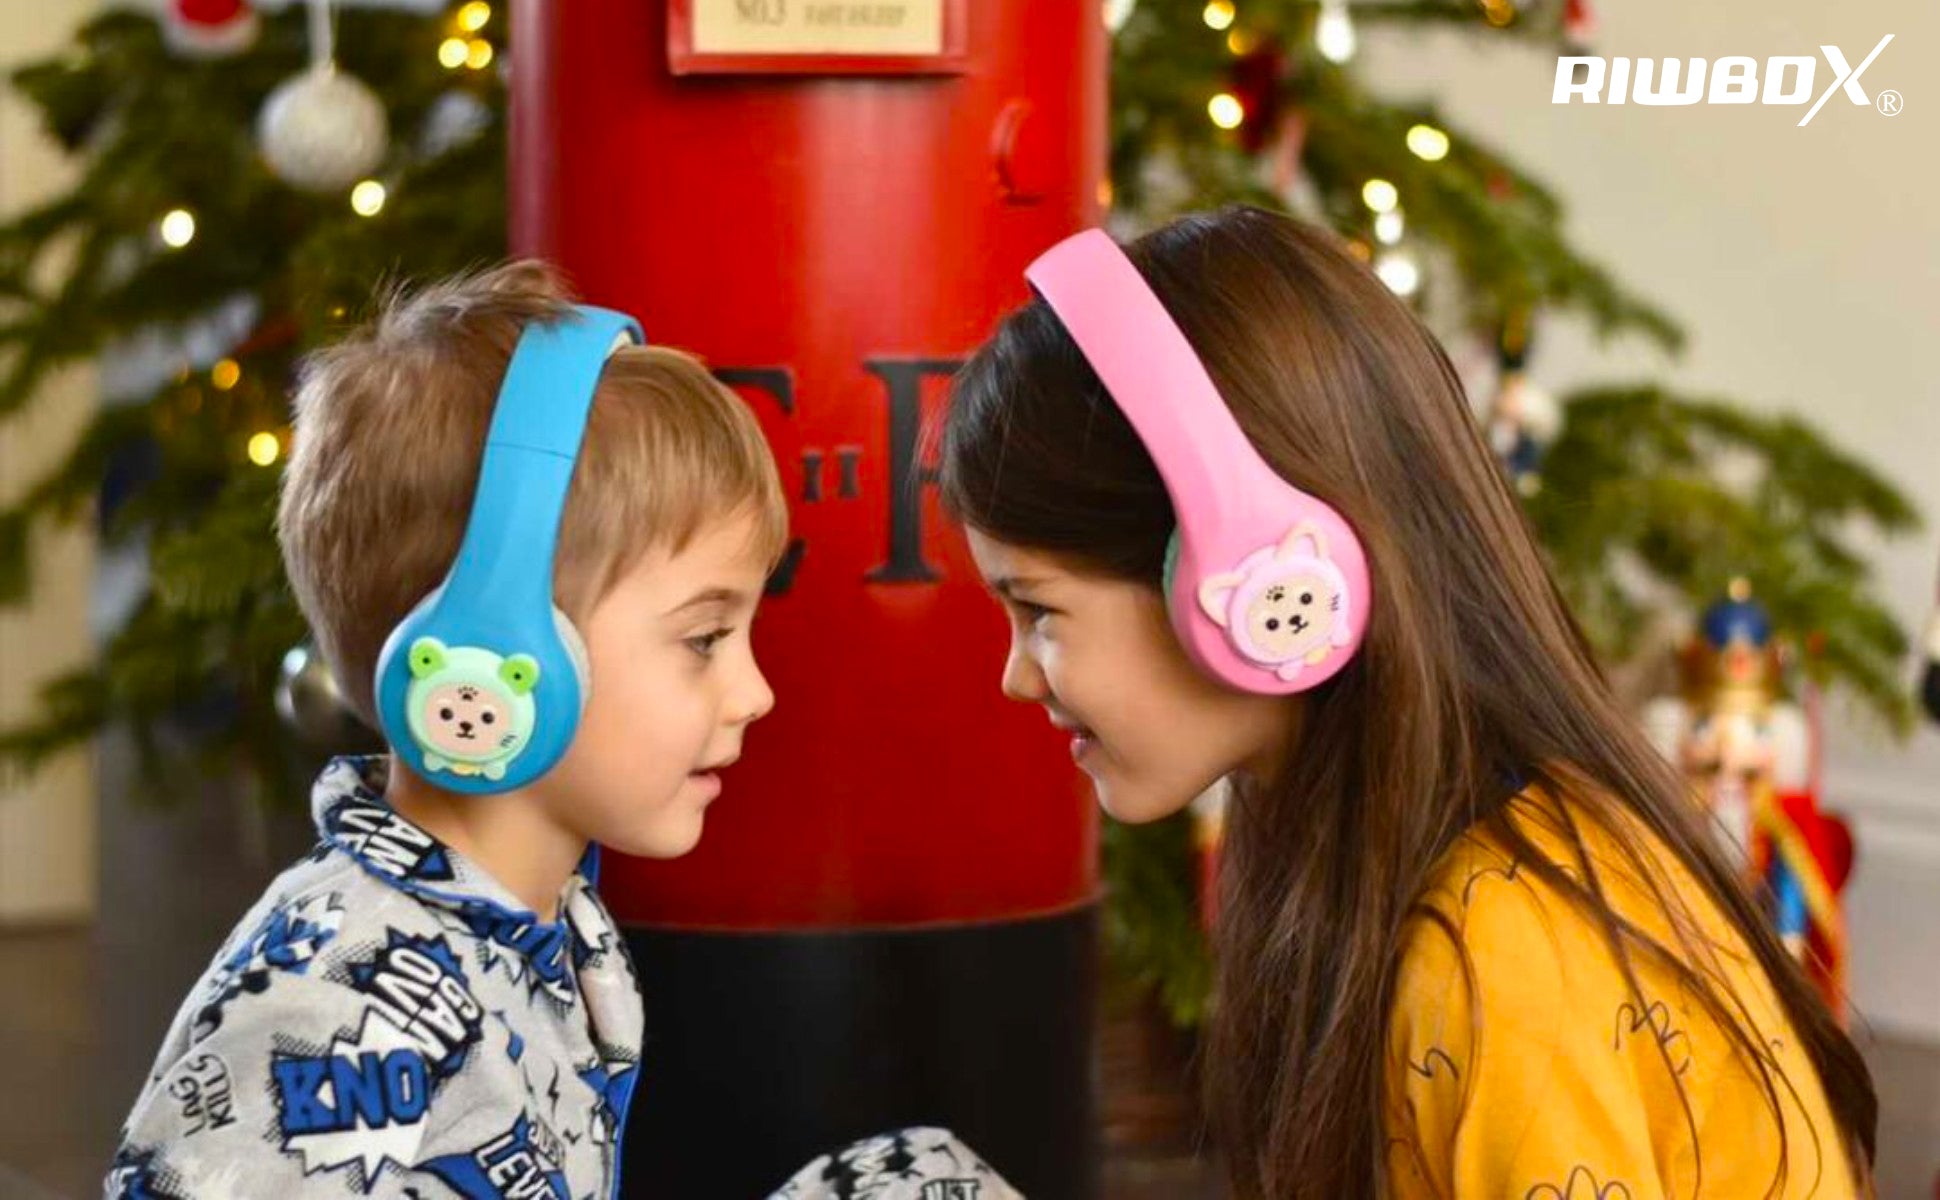 Riwbox Baosilon FB-7S Bluetooth Headphones With LED For Kids